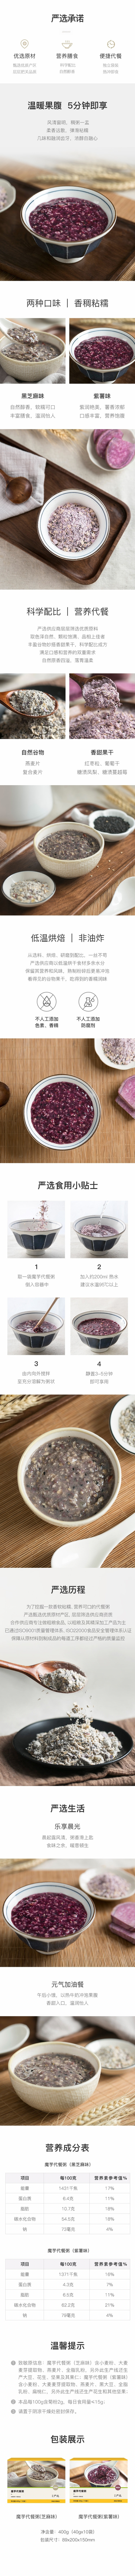 YANXUAN Konjac Meal Replacement Porridge Purple sweet potato Flavor 400g